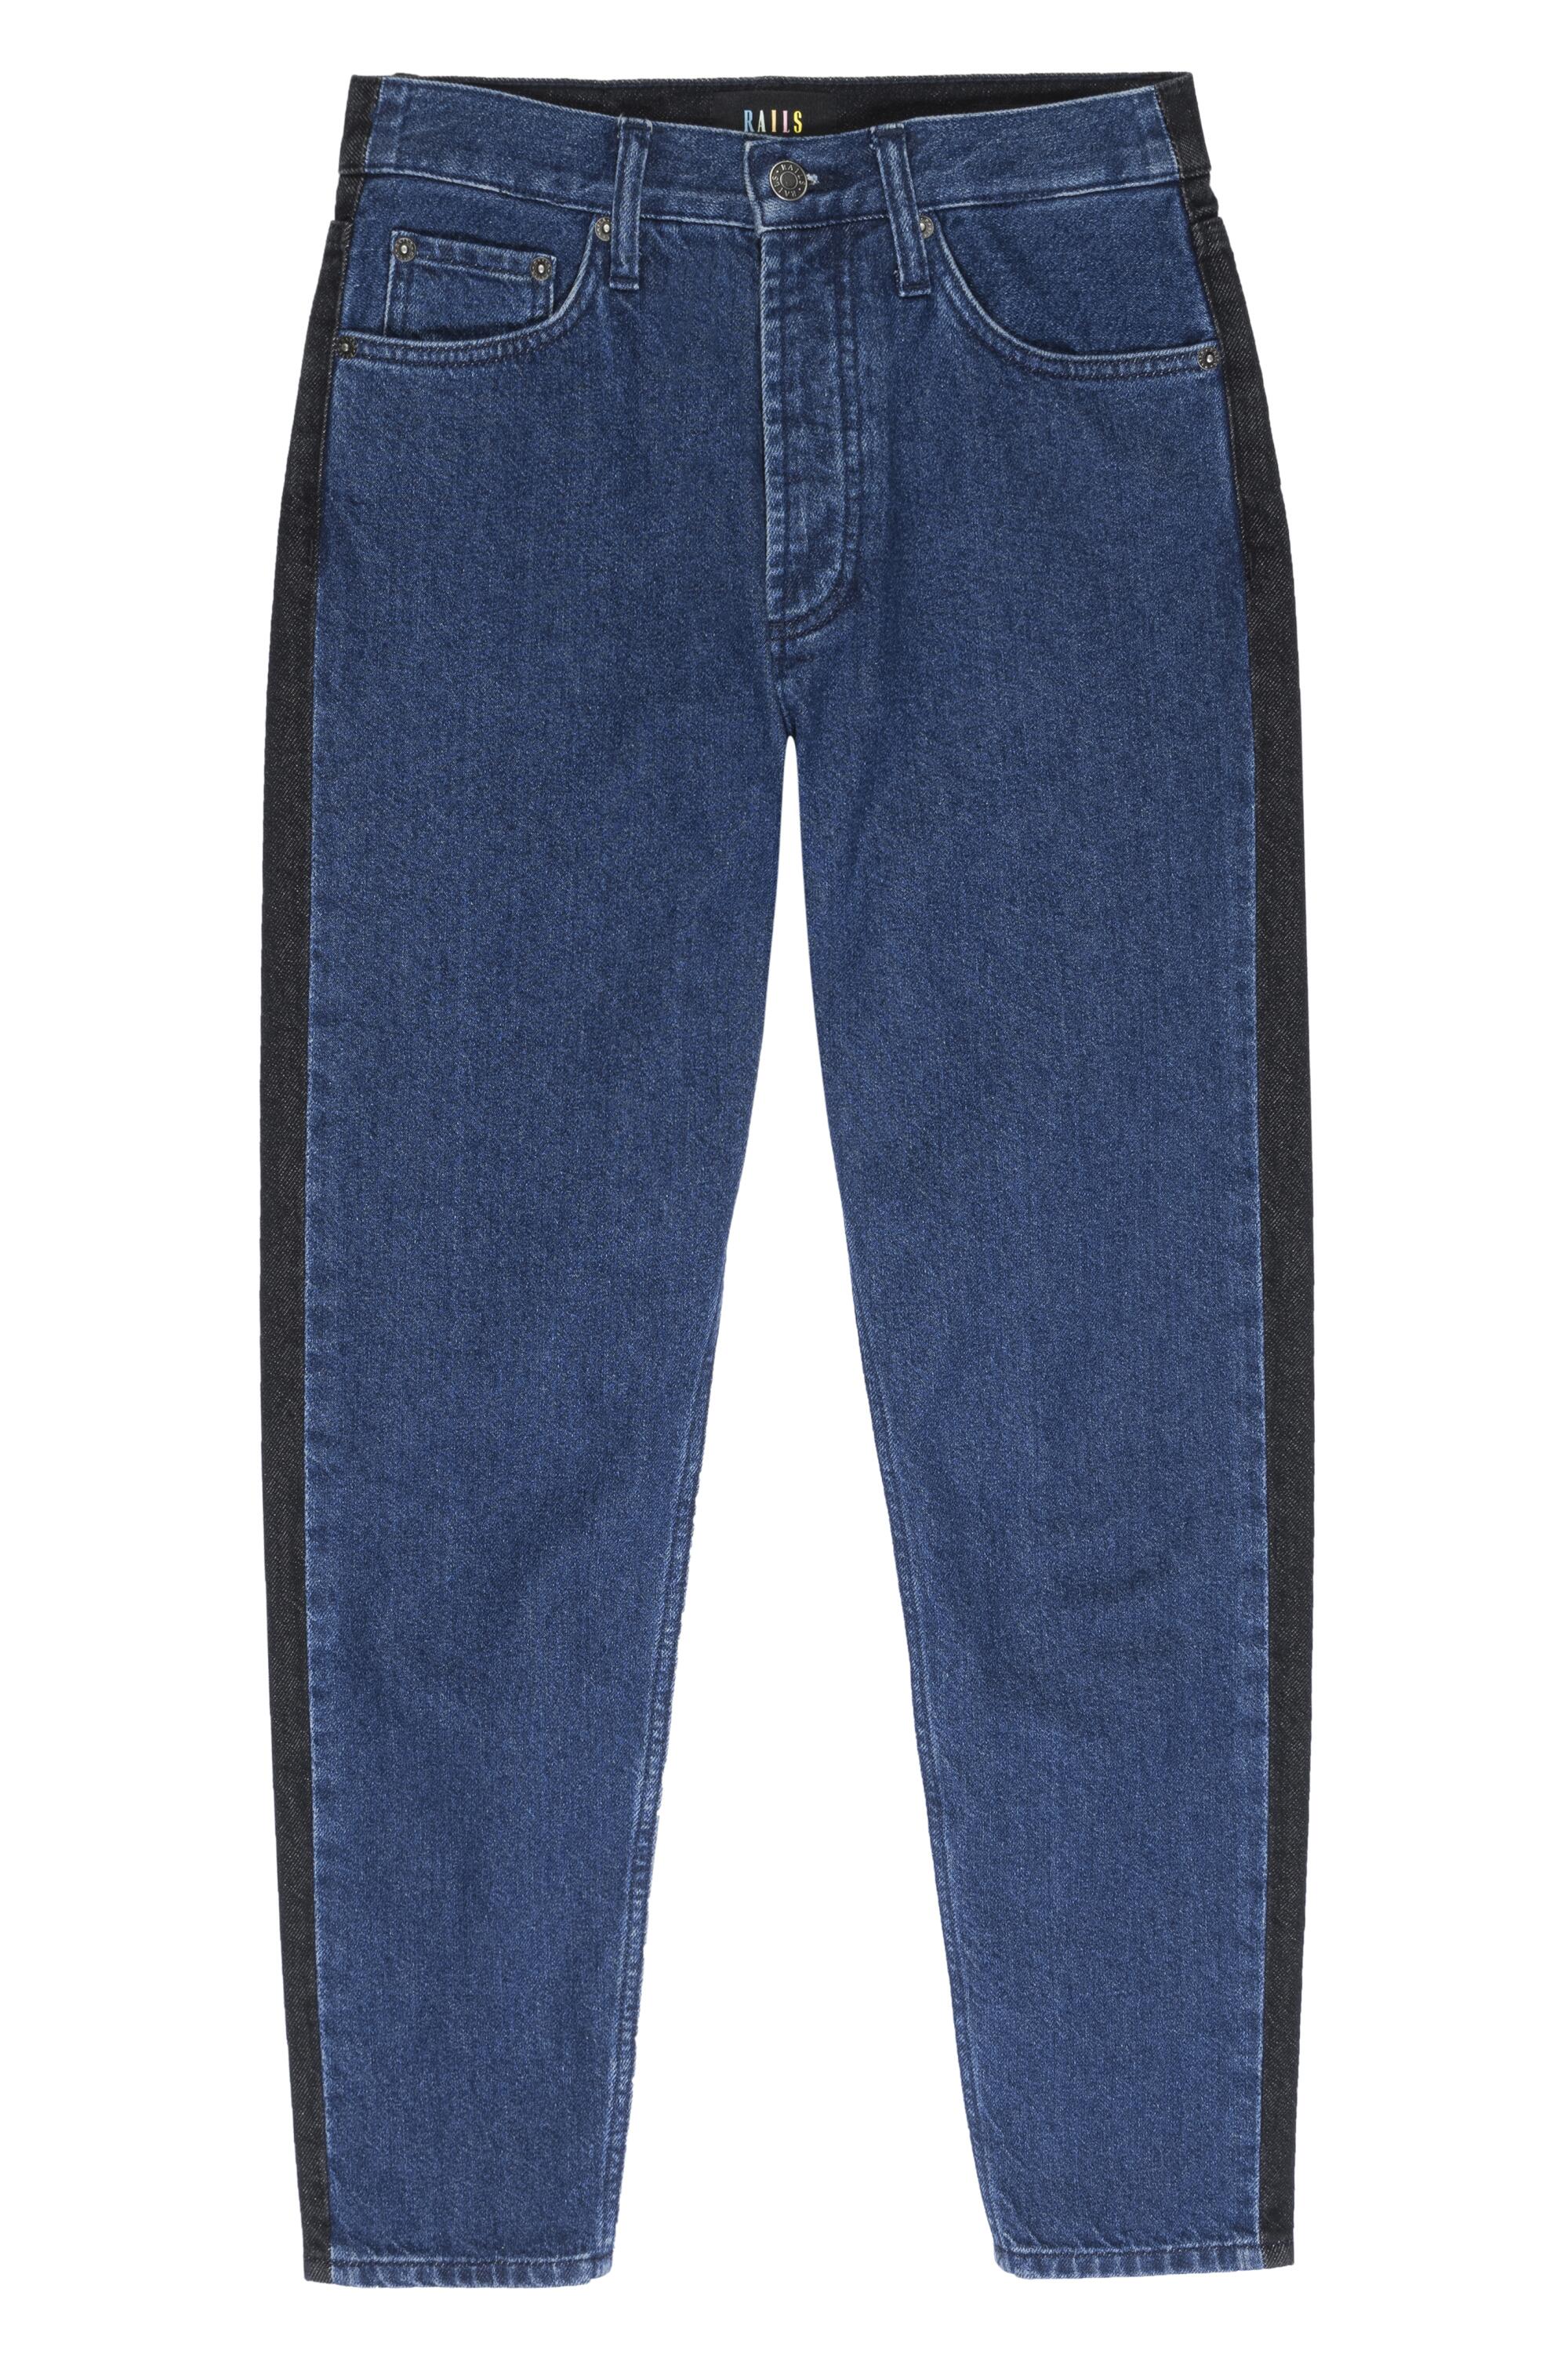 Rails dark blue denim pants with a black denim stripe on either side